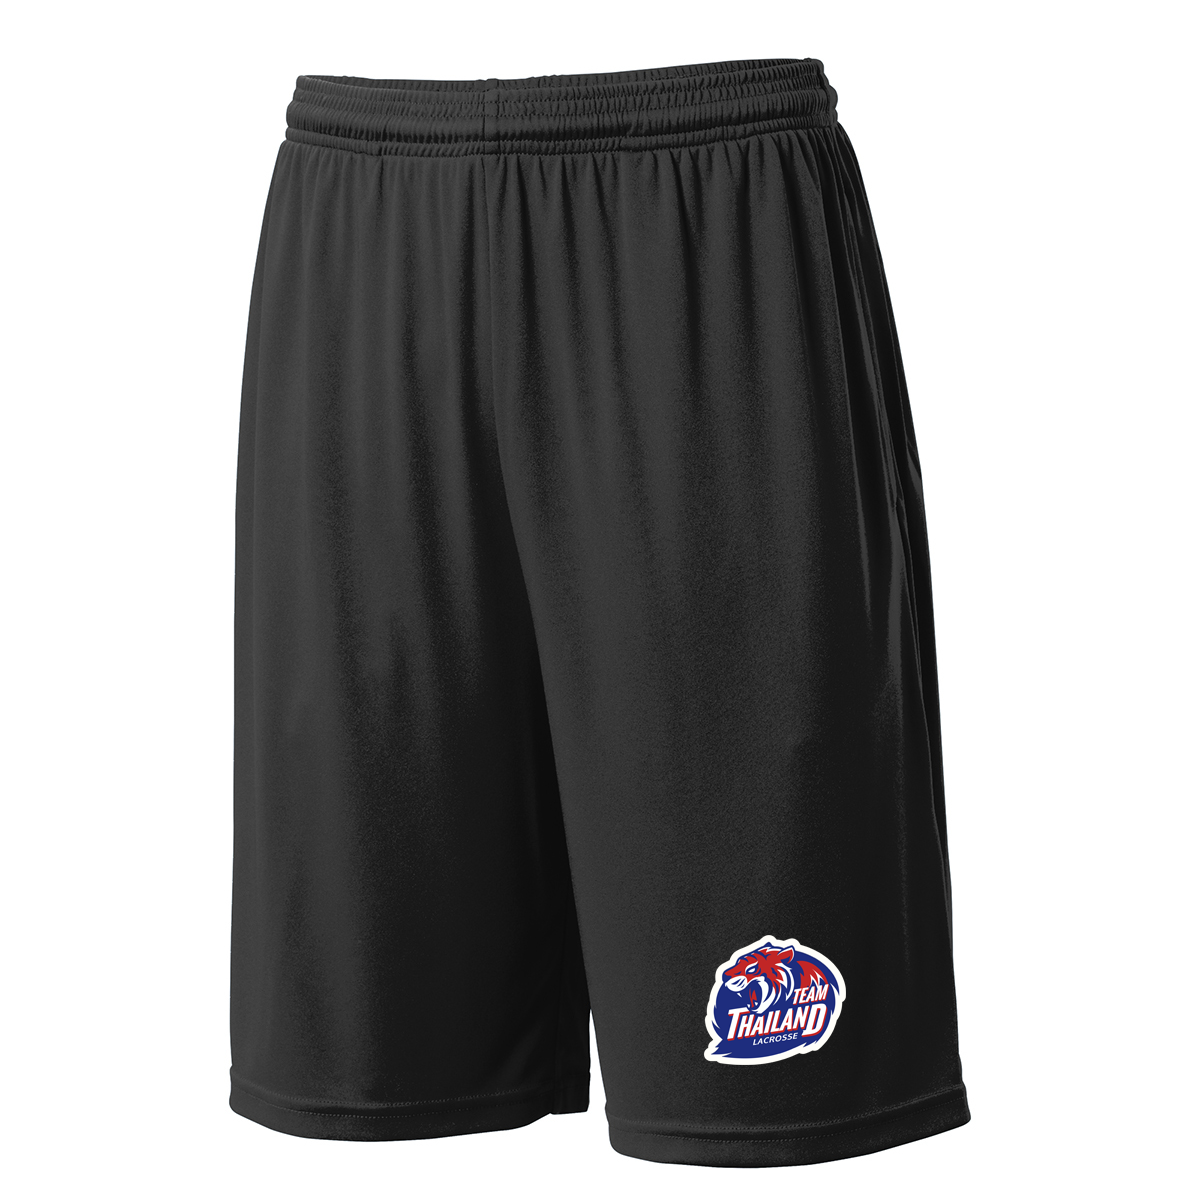 Thailand Lacrosse Shorts